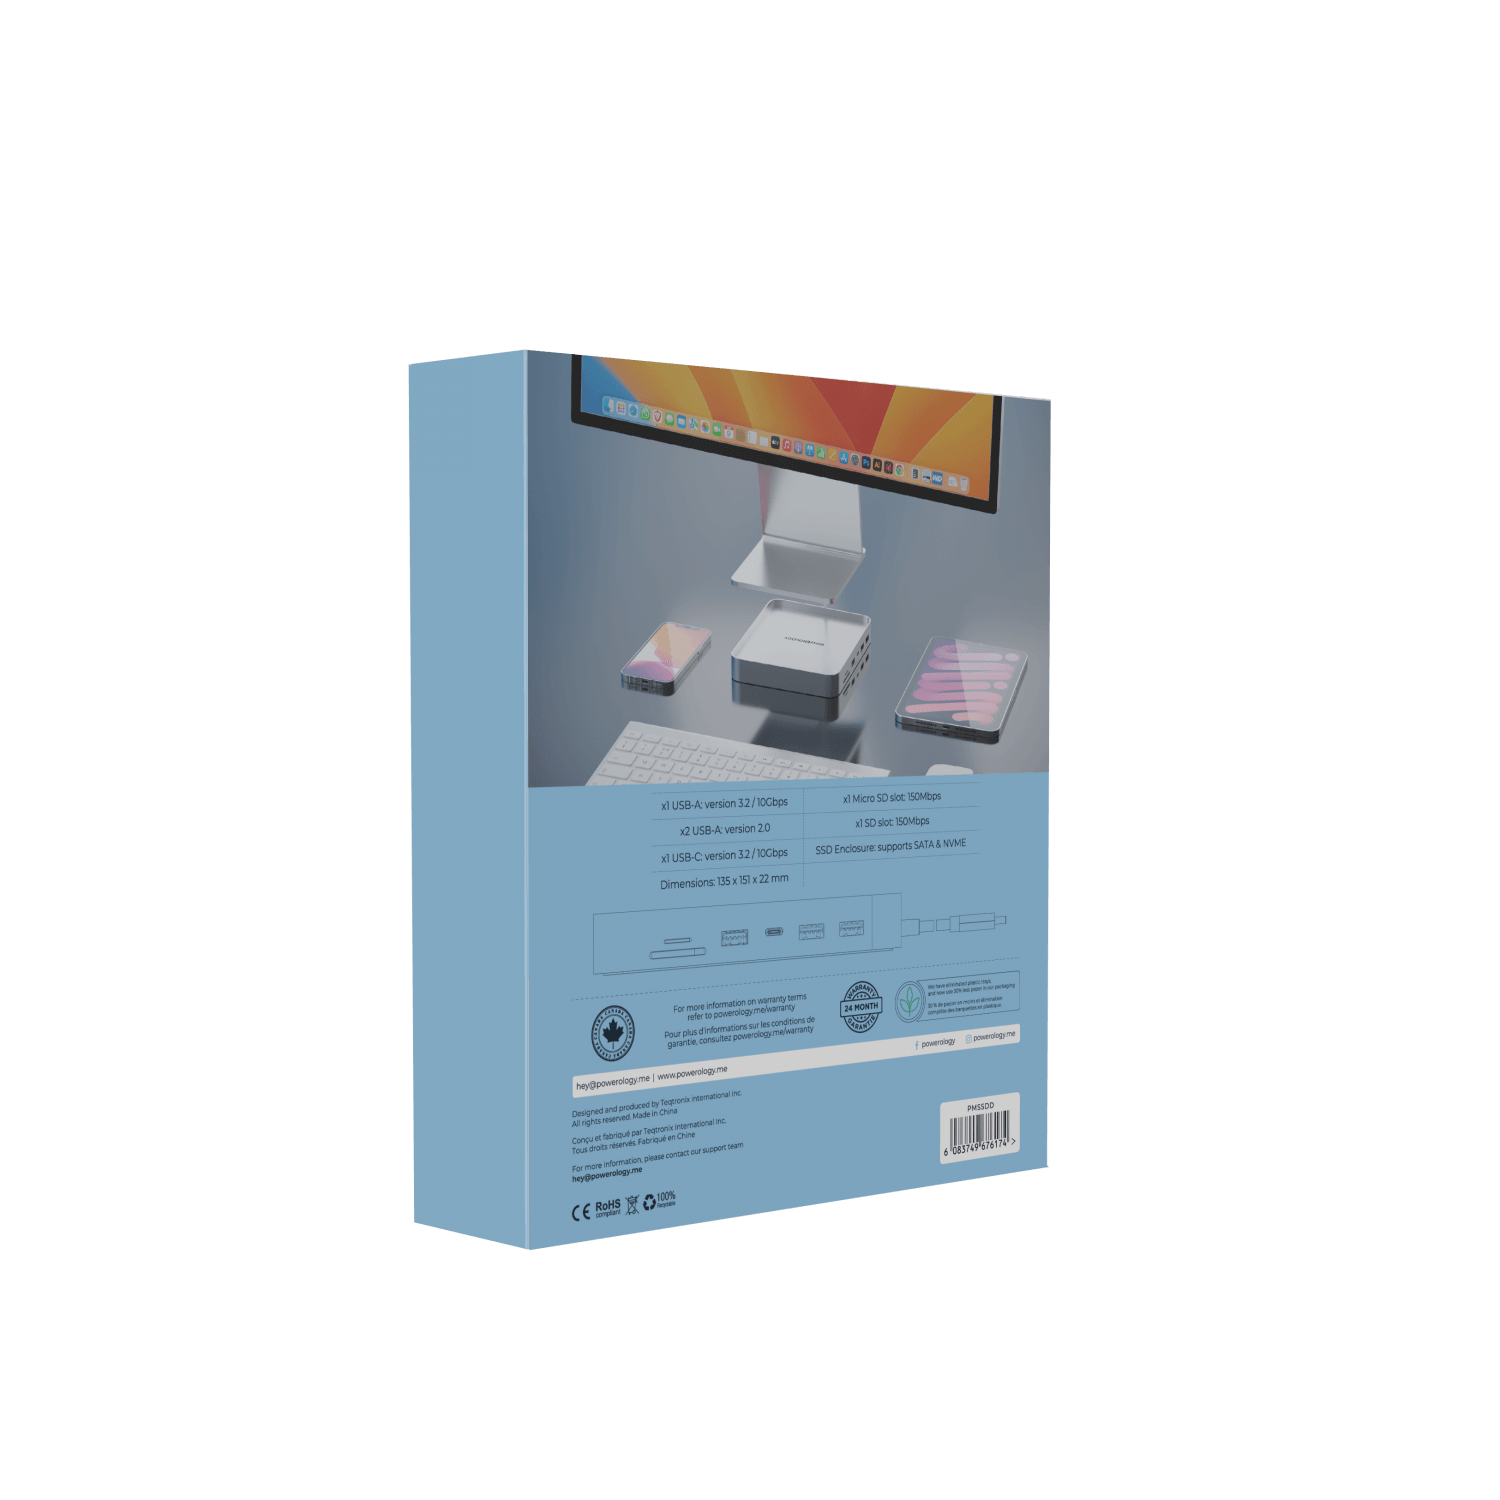 24"" iMac Uyumlu USB-C Hub & Stand ve SSD Kasa